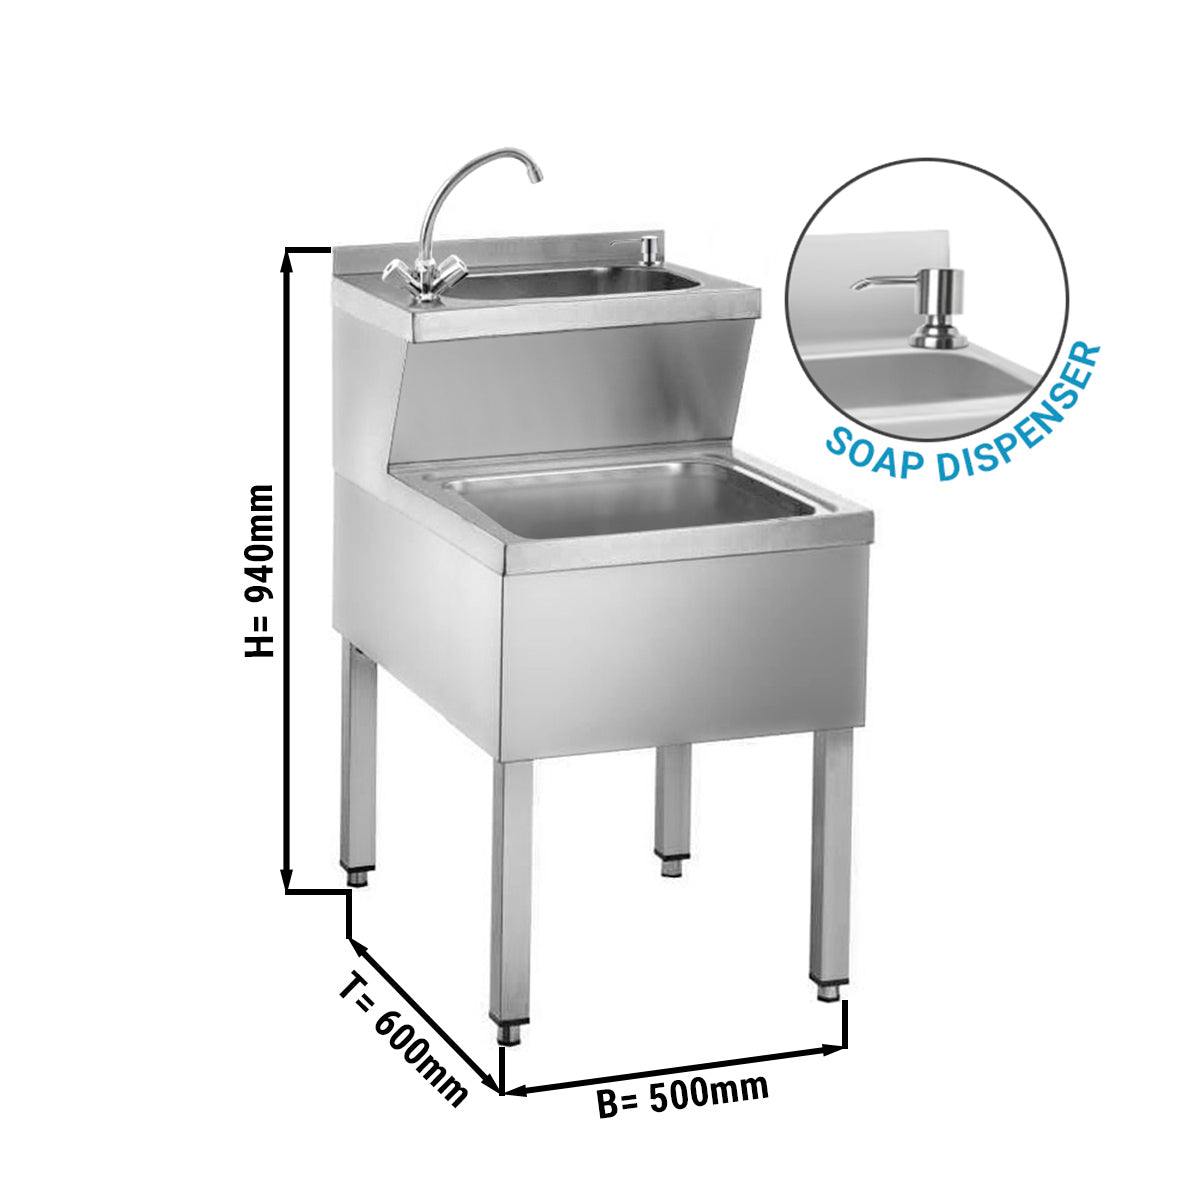 Håndvaskkombination + rengøring og skylning - med sæbedispenser